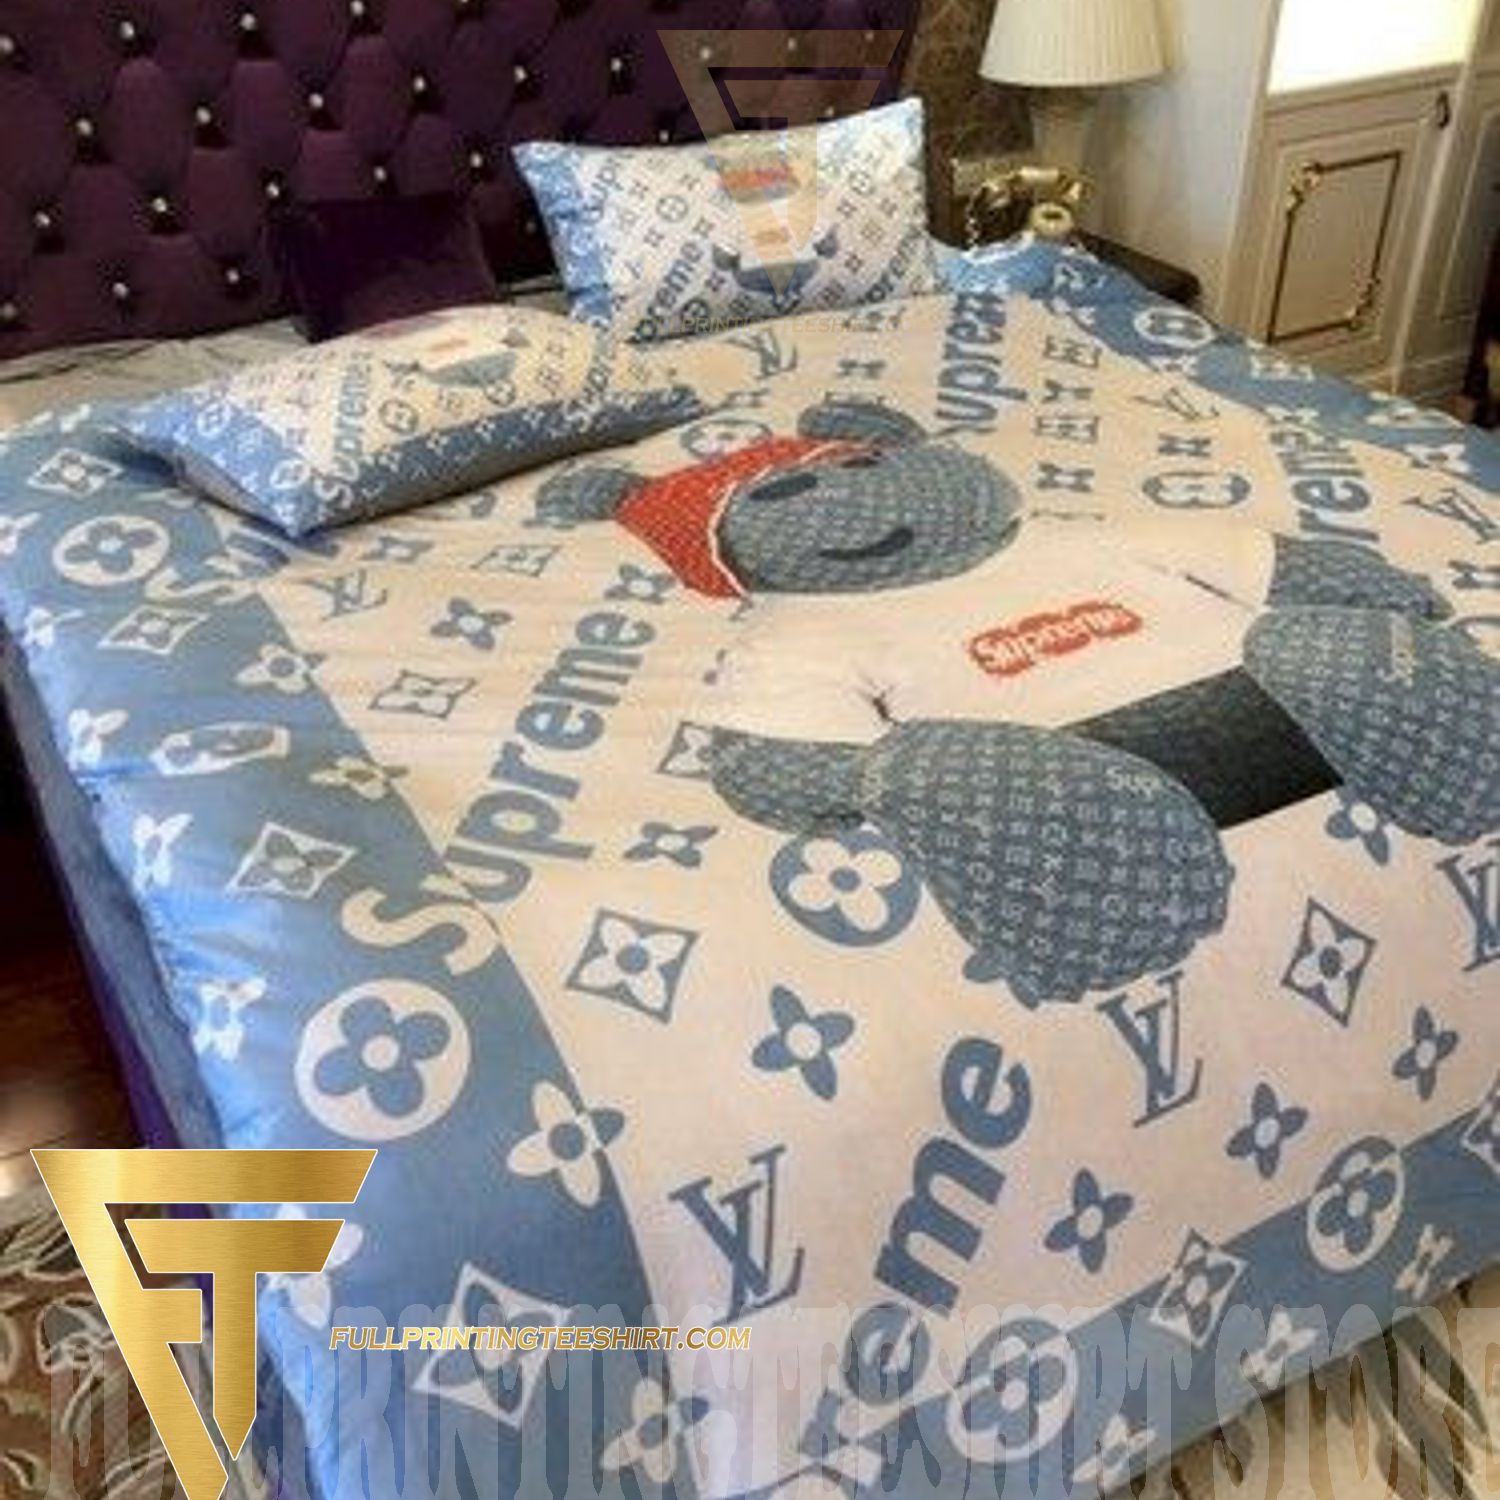 Louis Vuitton Bedding Sets Duvet Cover Luxury Brand Bedroom Sets